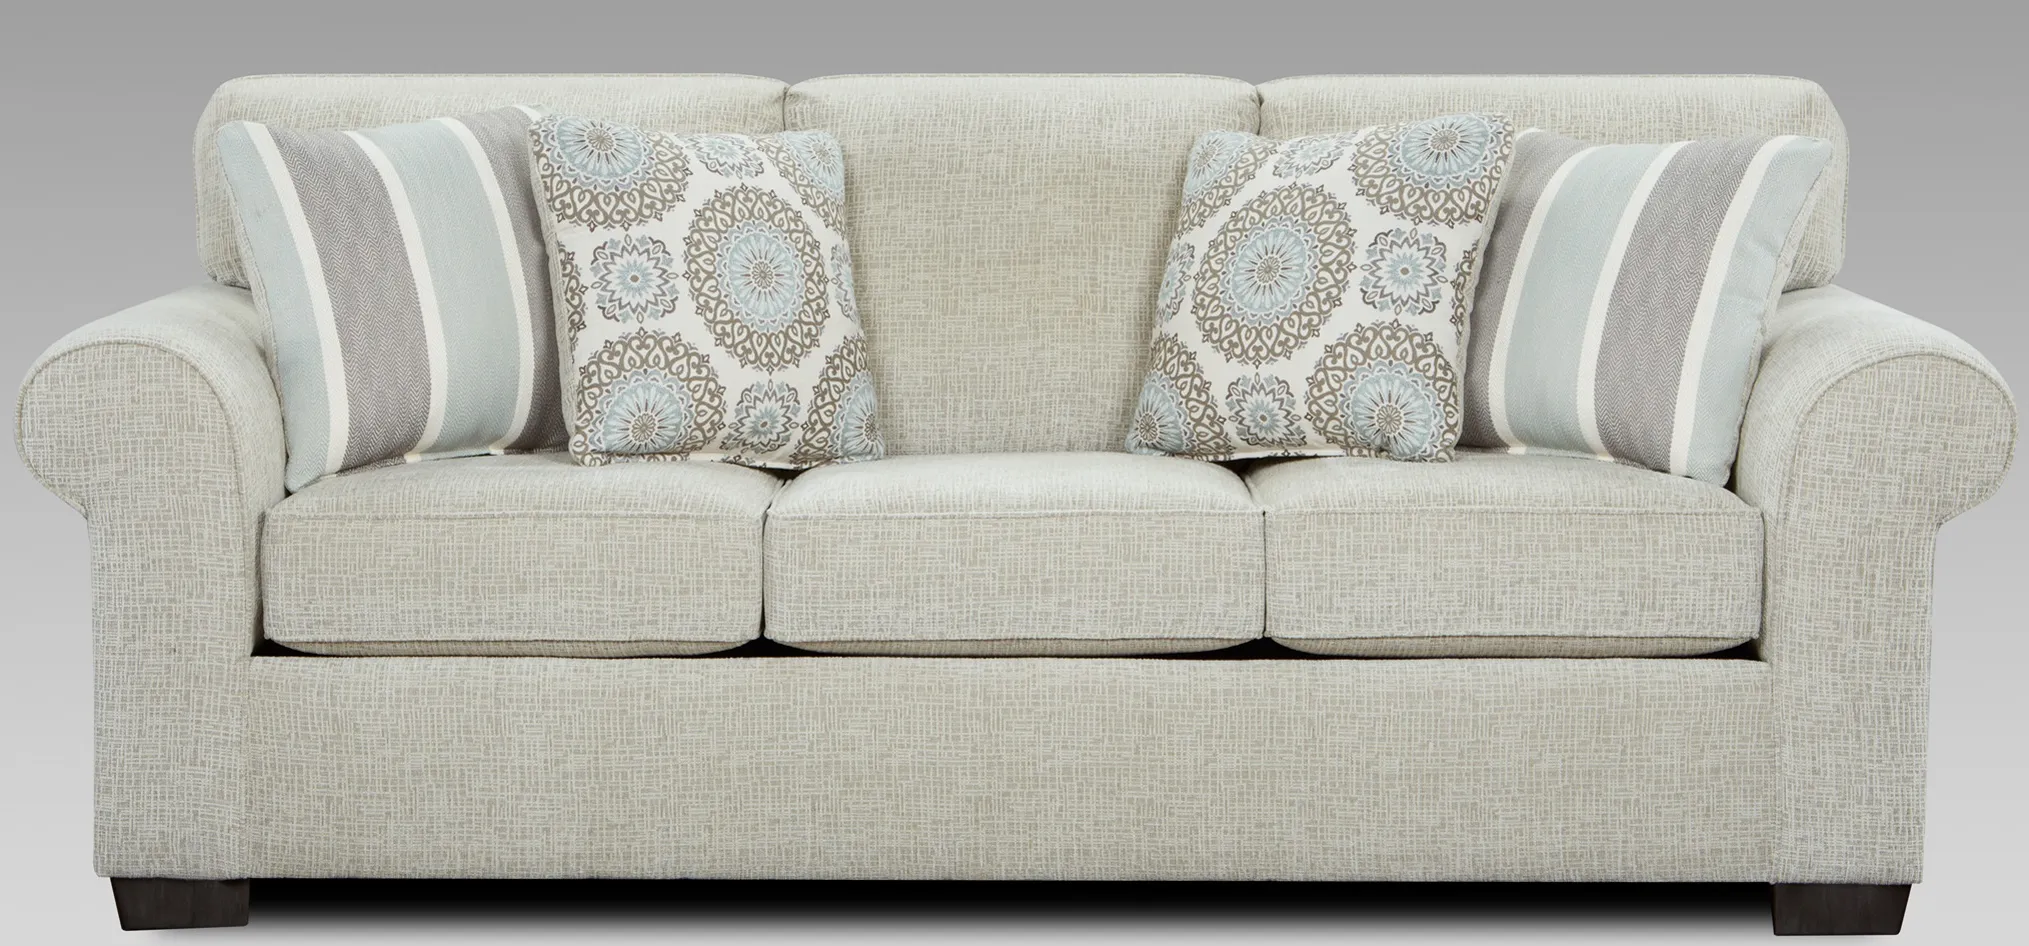 Affordable Furniture Charisma Linen Queen Sleeper Sofa